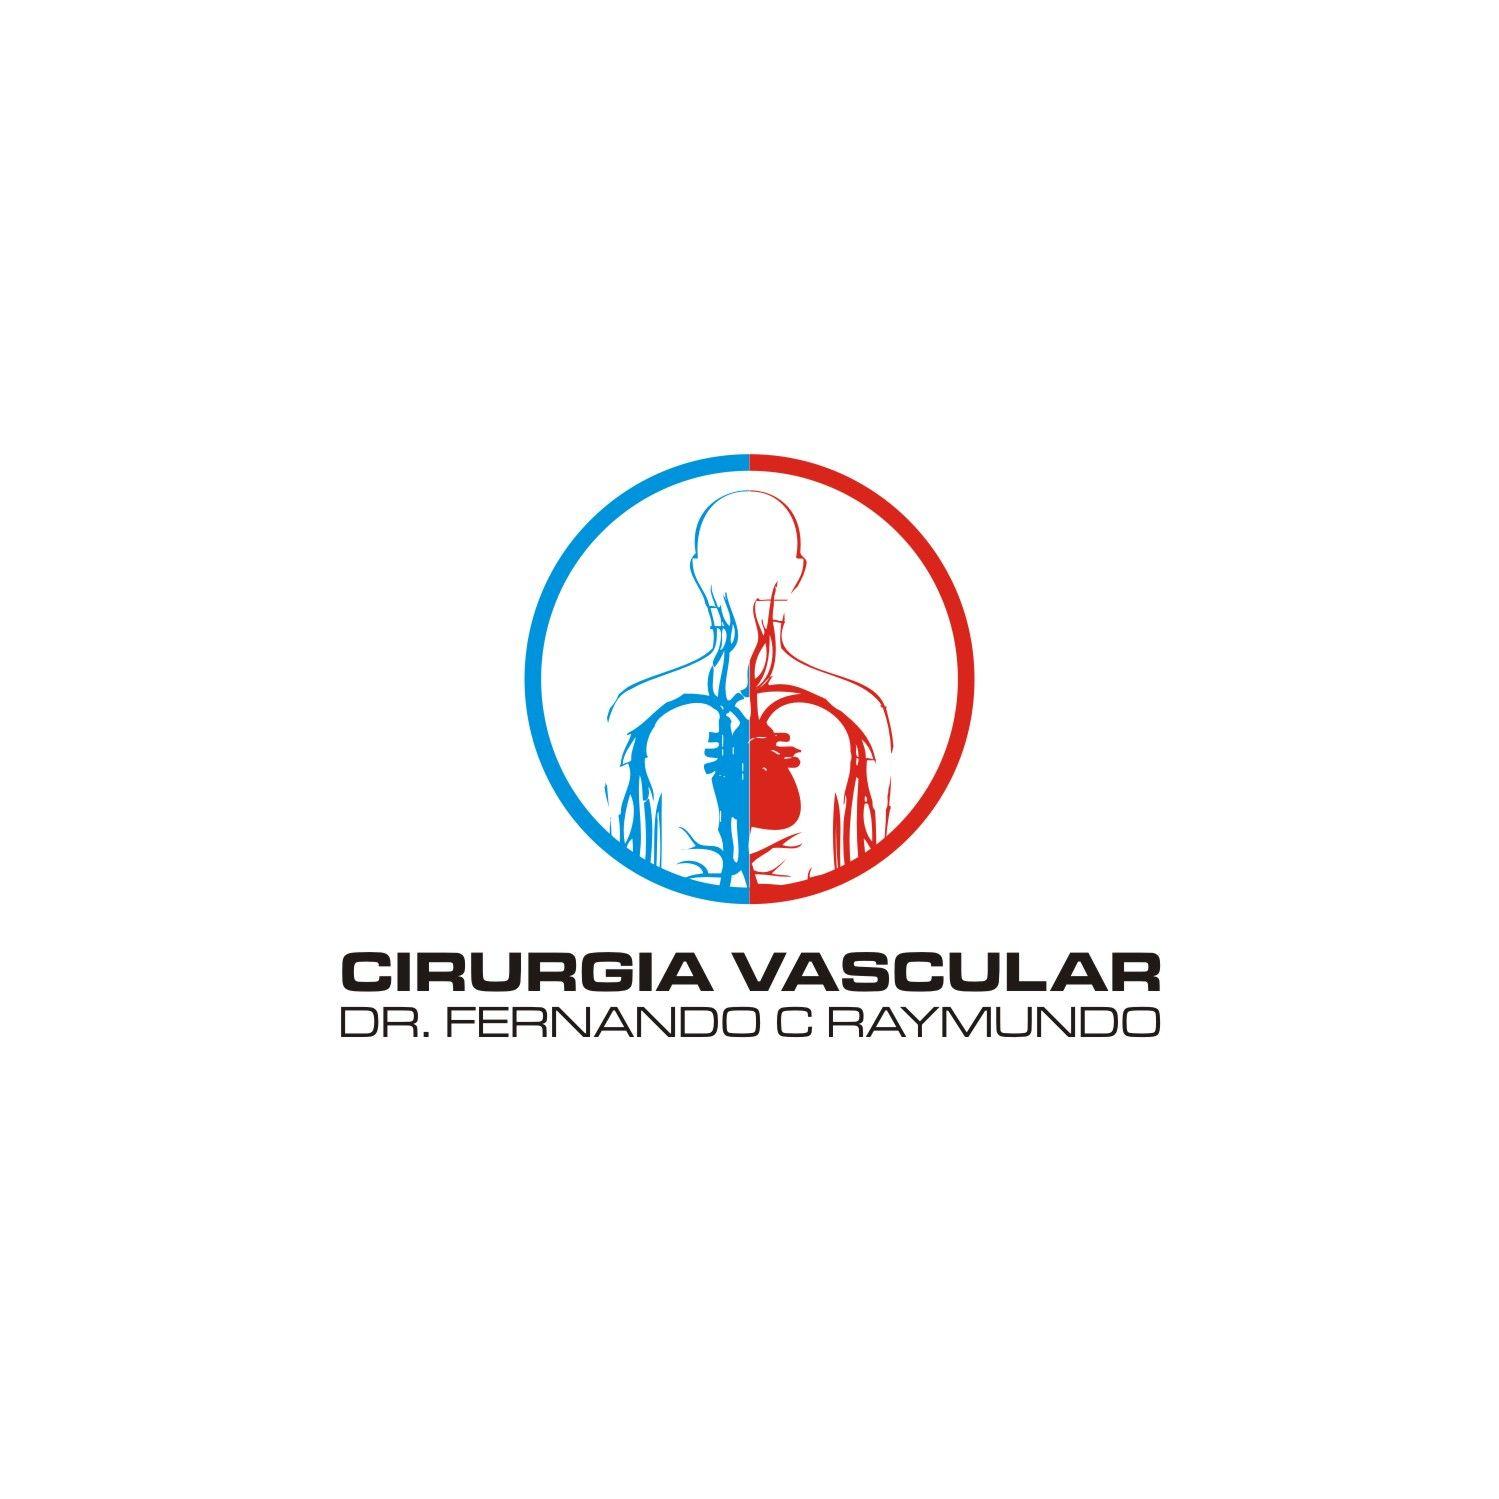 Vascular Logo - Elegant, Conservative, Doctor Logo Design for Cirurgia Vascular, Dr ...